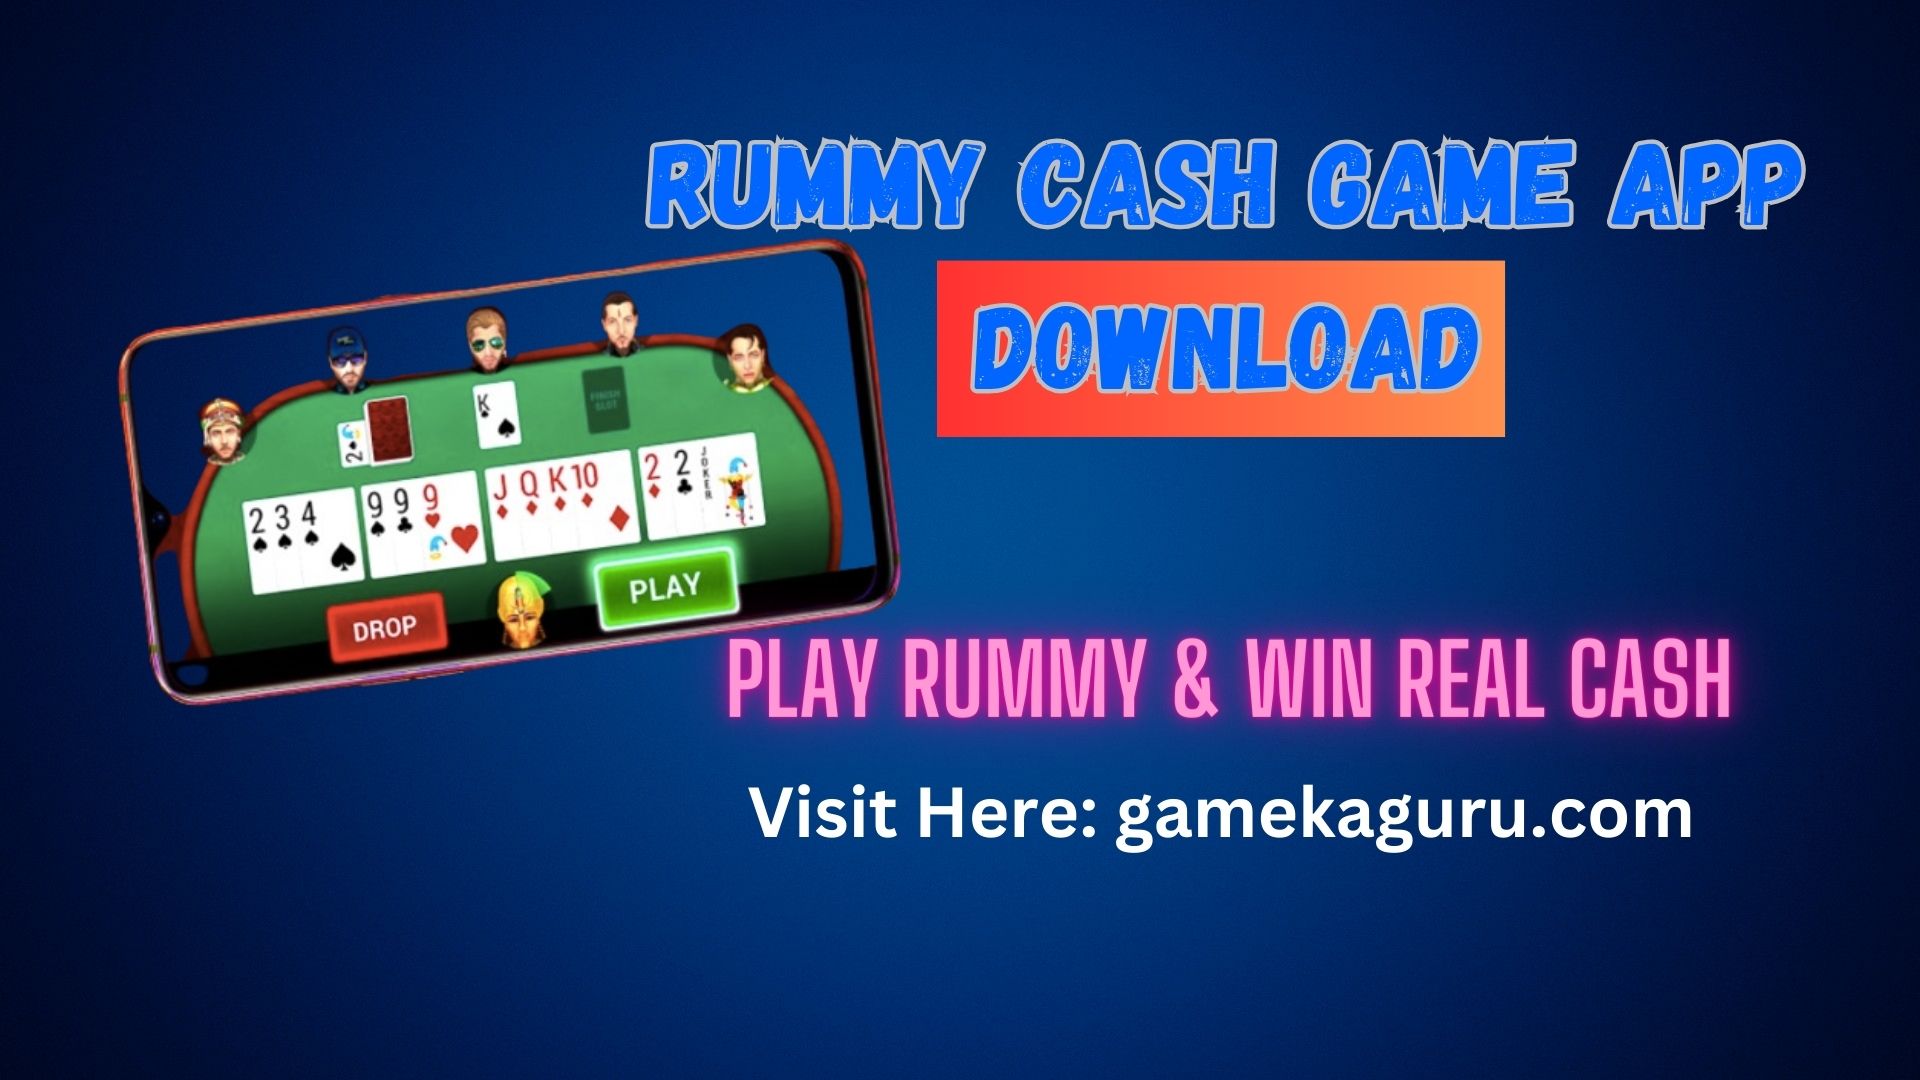 Rummy Cash Game App Download